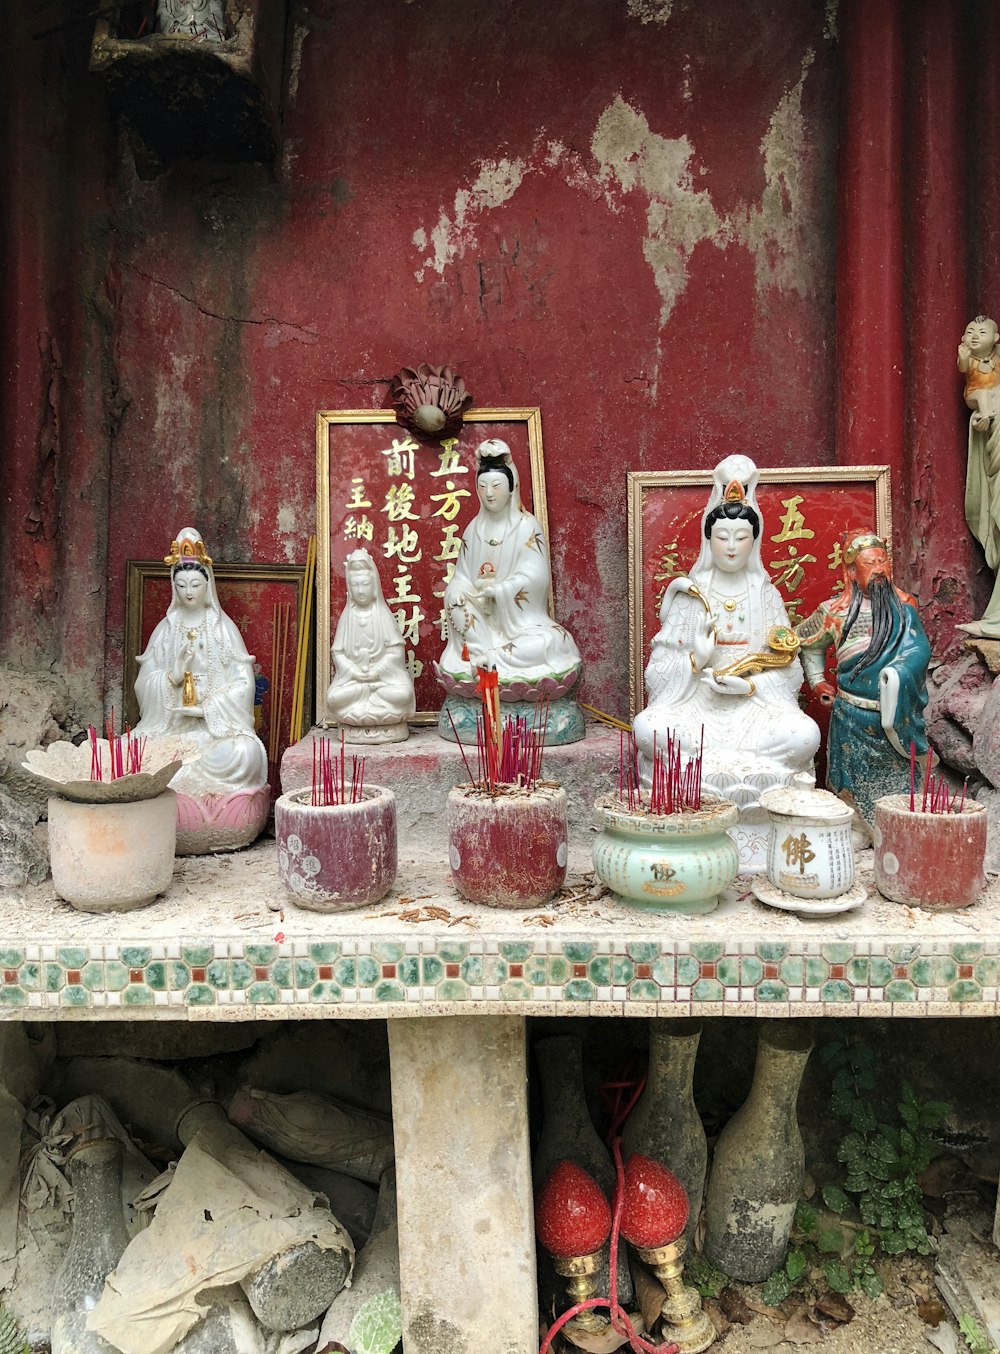 fünf verschiedene hinduistische Götterfiguren aus Keramik